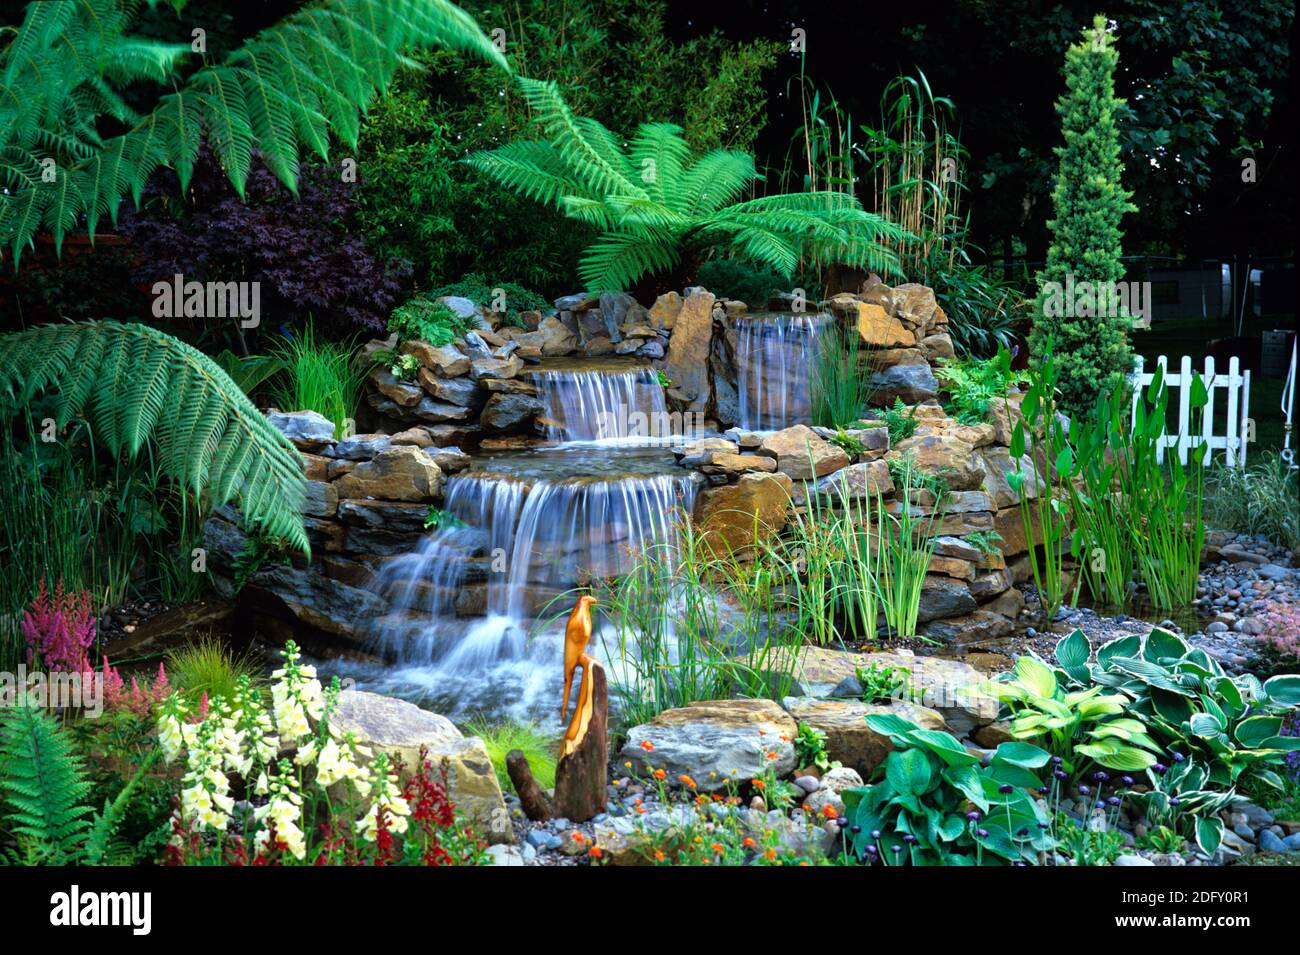 Show garden waterfalls with tree ferns Stock Photo